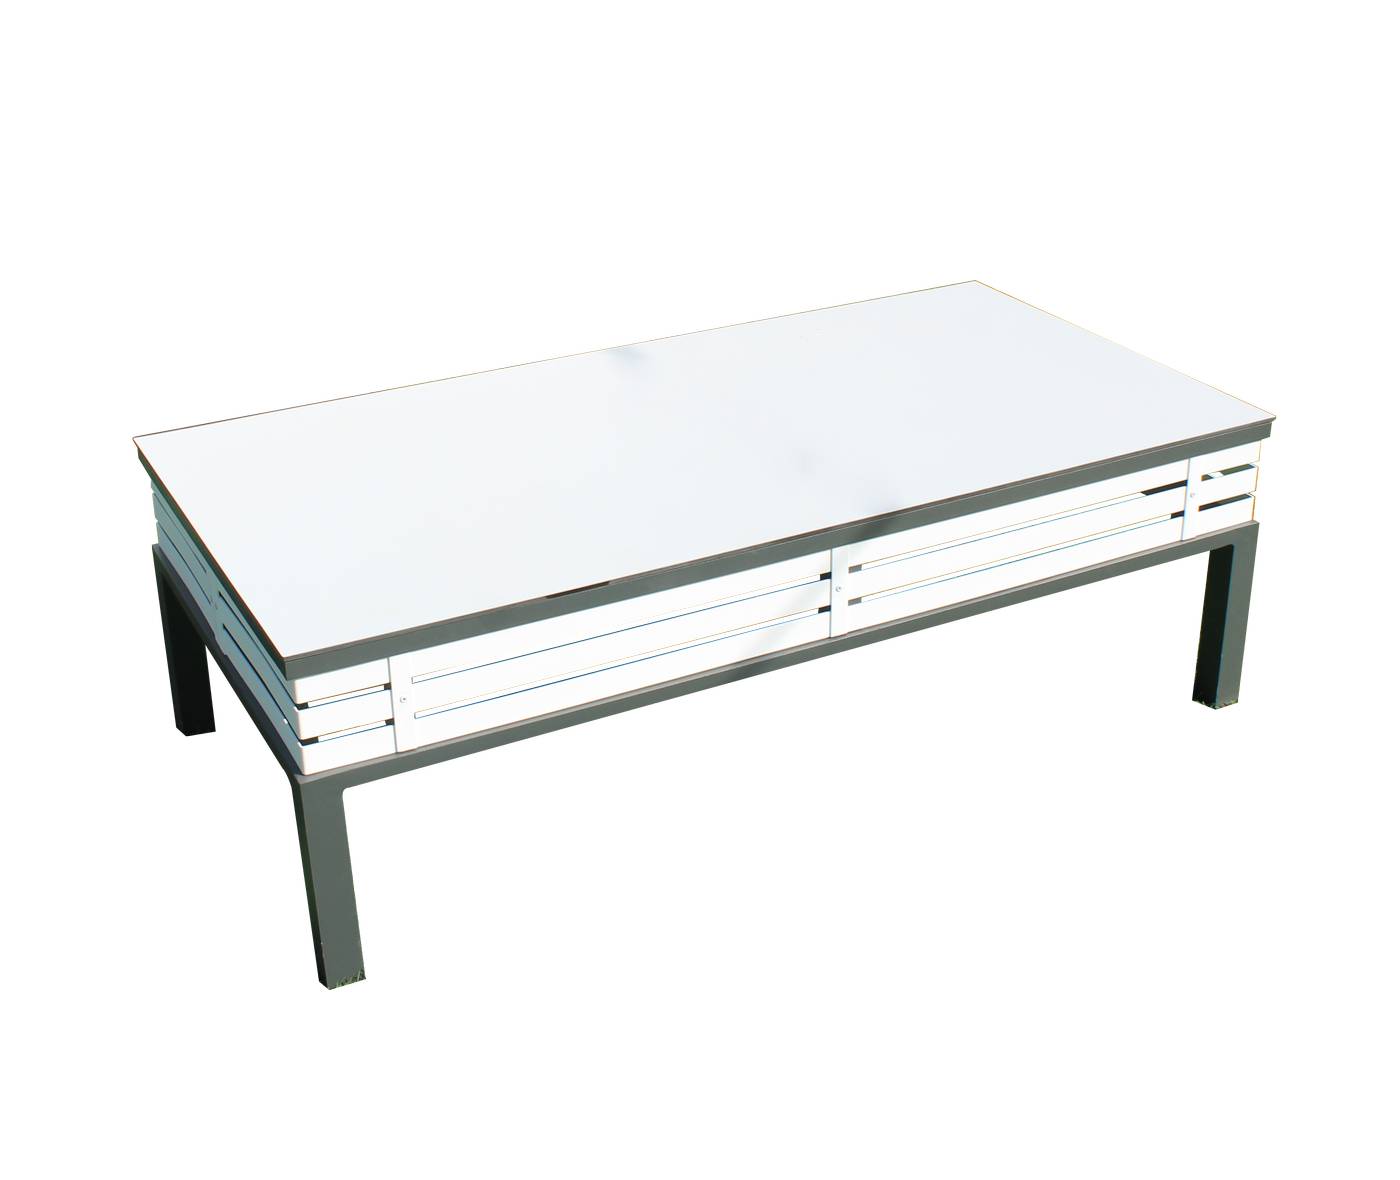 Set Aluminio Luxe Diva-9 - Lujoso conjunto de alumnio bicolor: 1 sofá de 2 plazas + 2 sillones + 2 reposapiés + 1 mesa de centro.